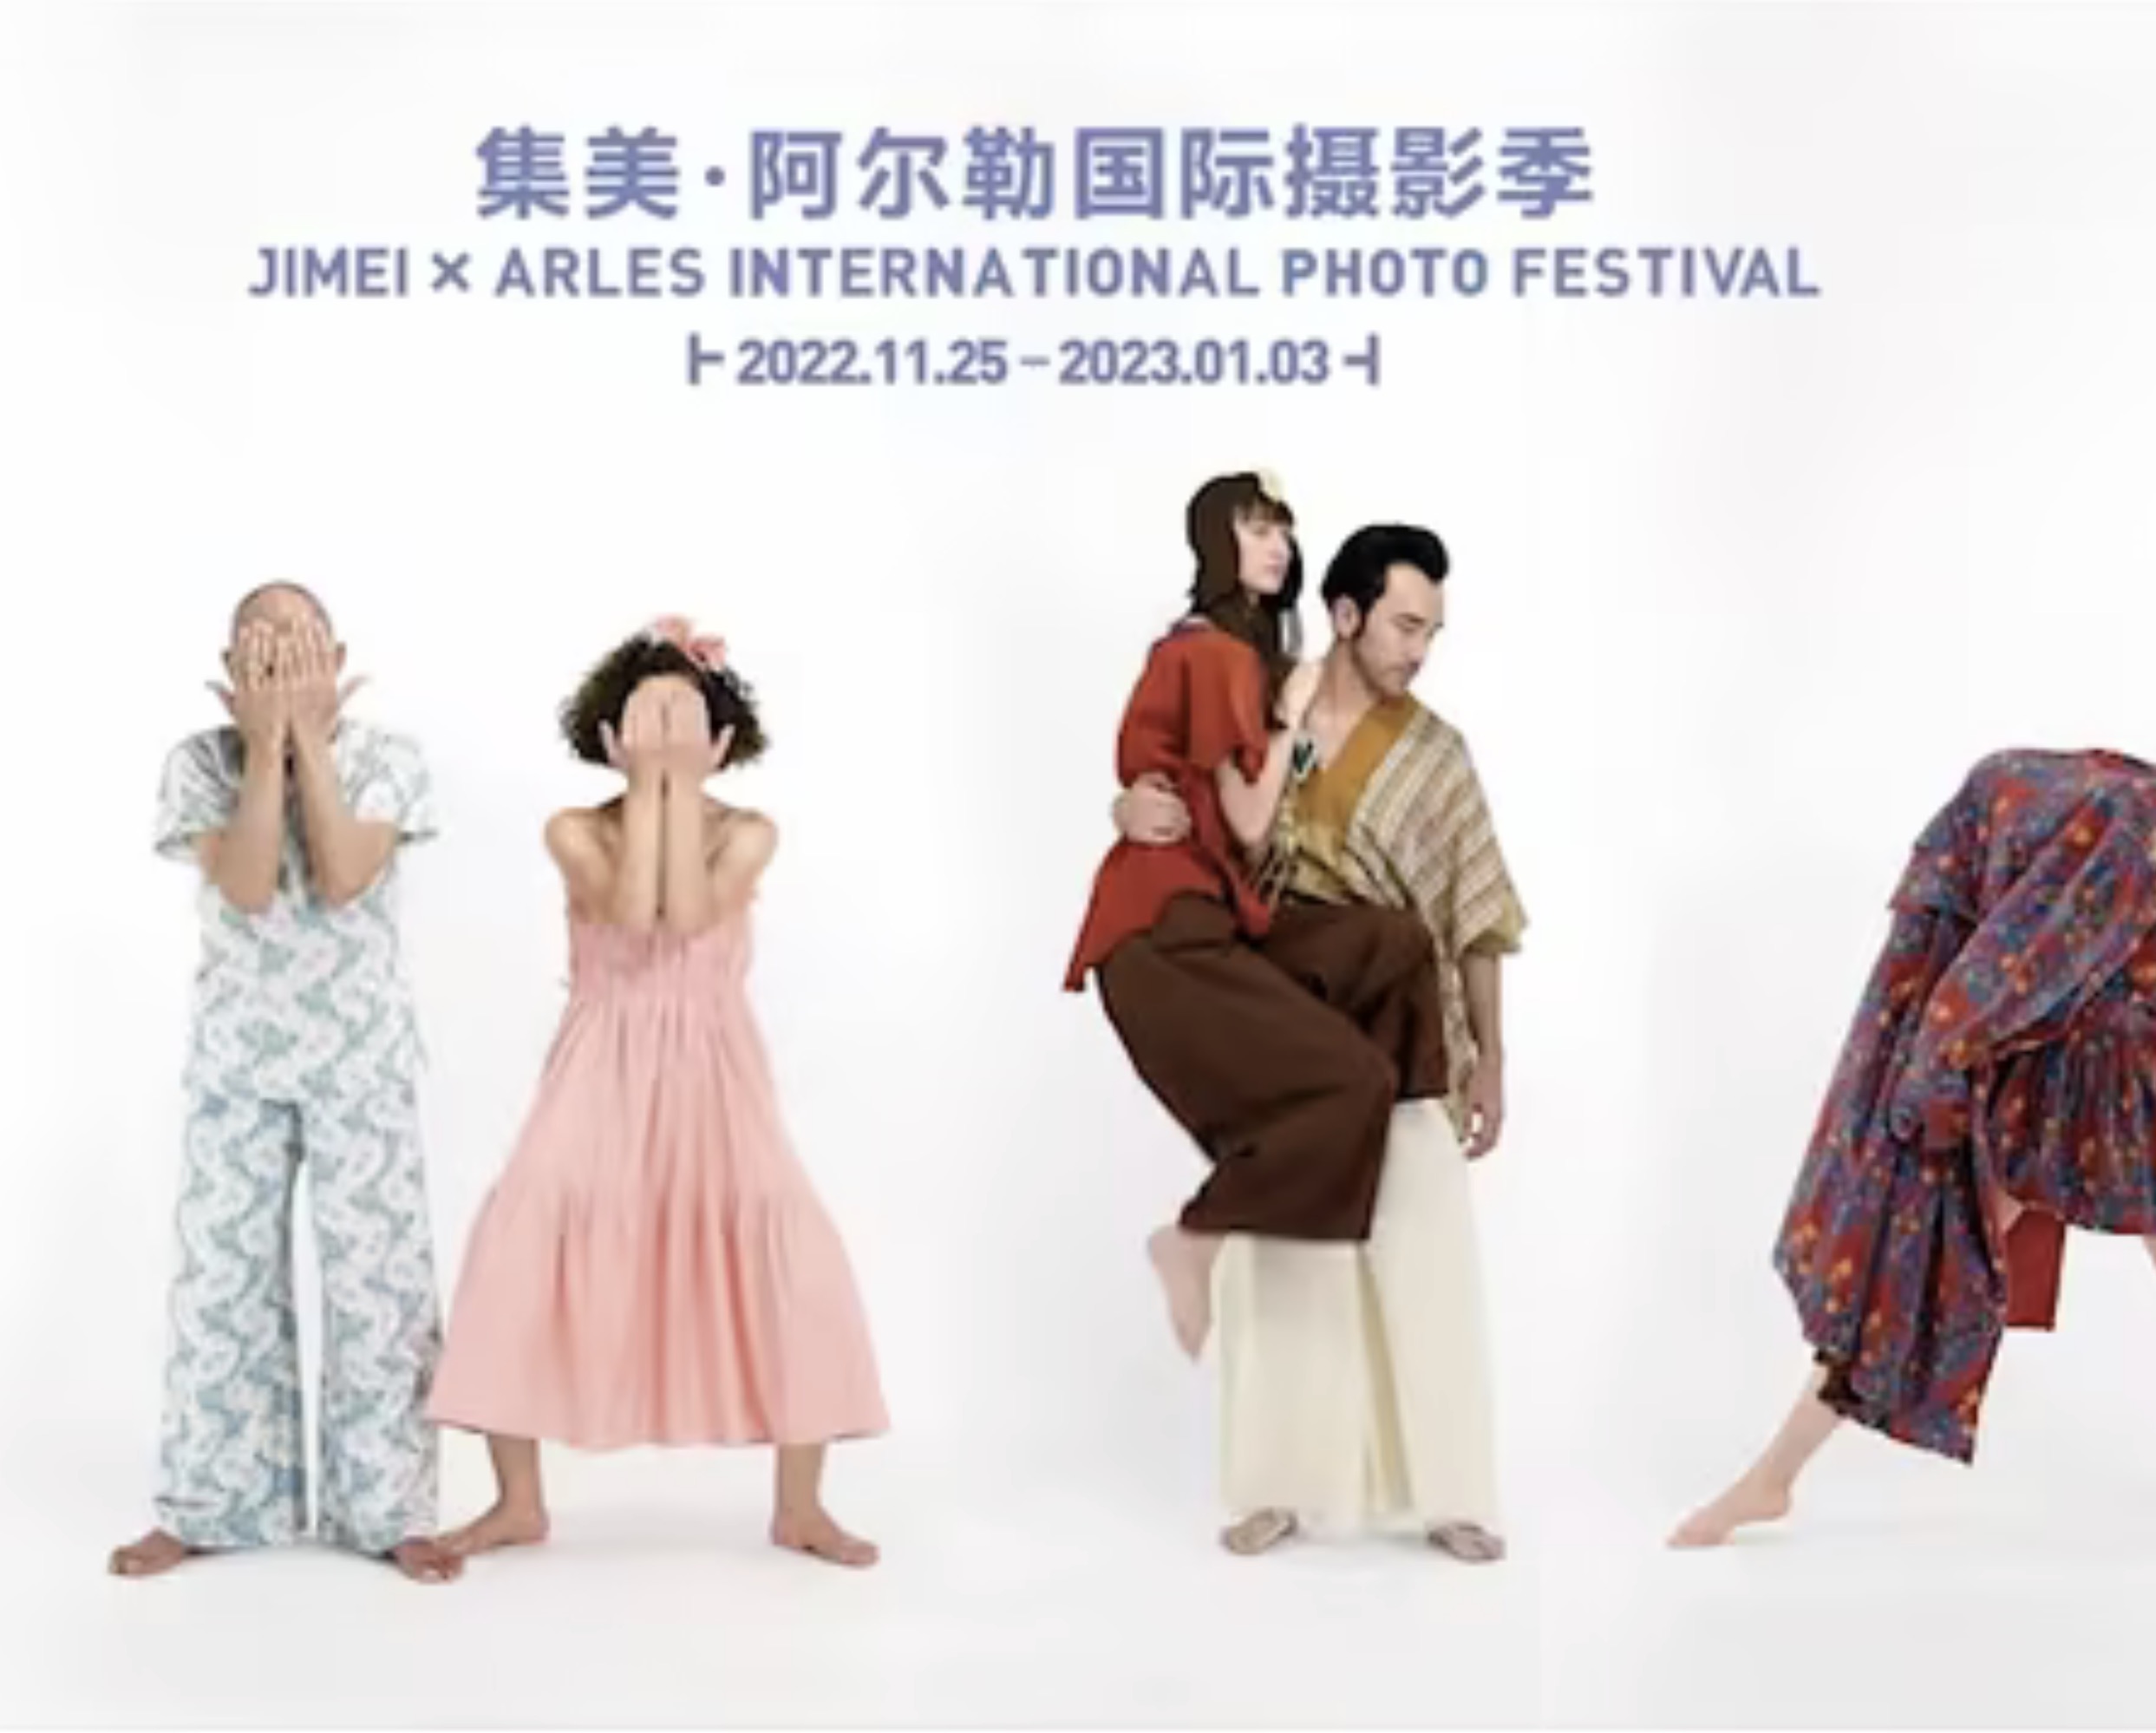 Jimei x Arles International Photo Festival 2022